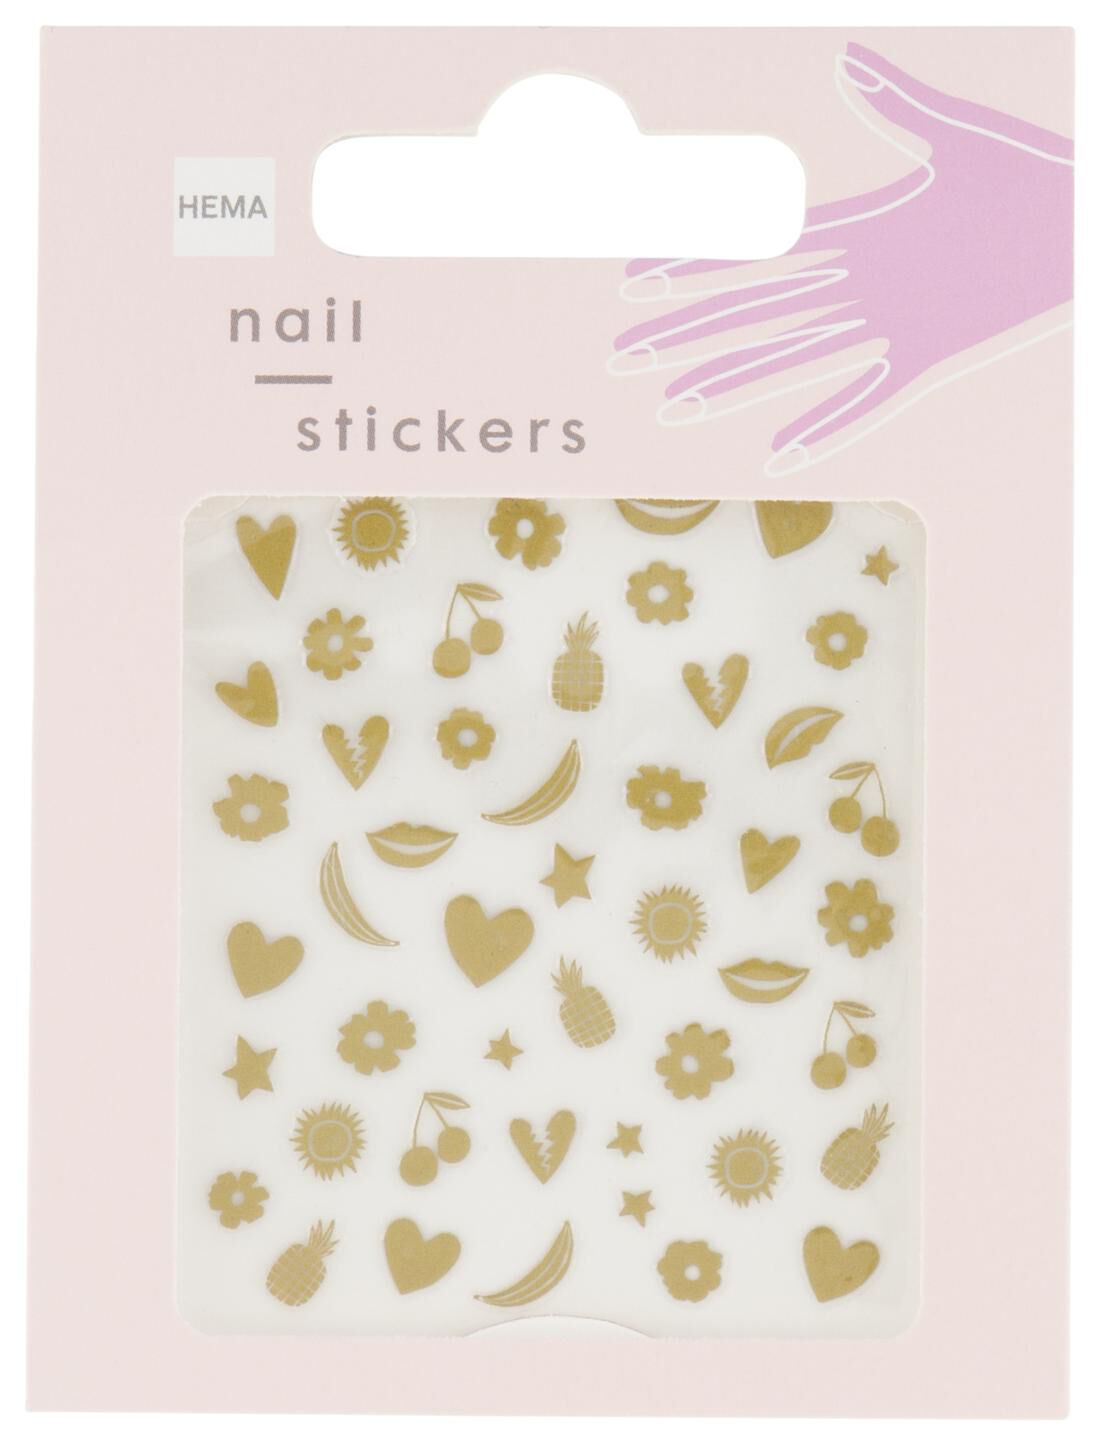 HEMA Nagel Stickers Goud - 48 Stuks (goud.)